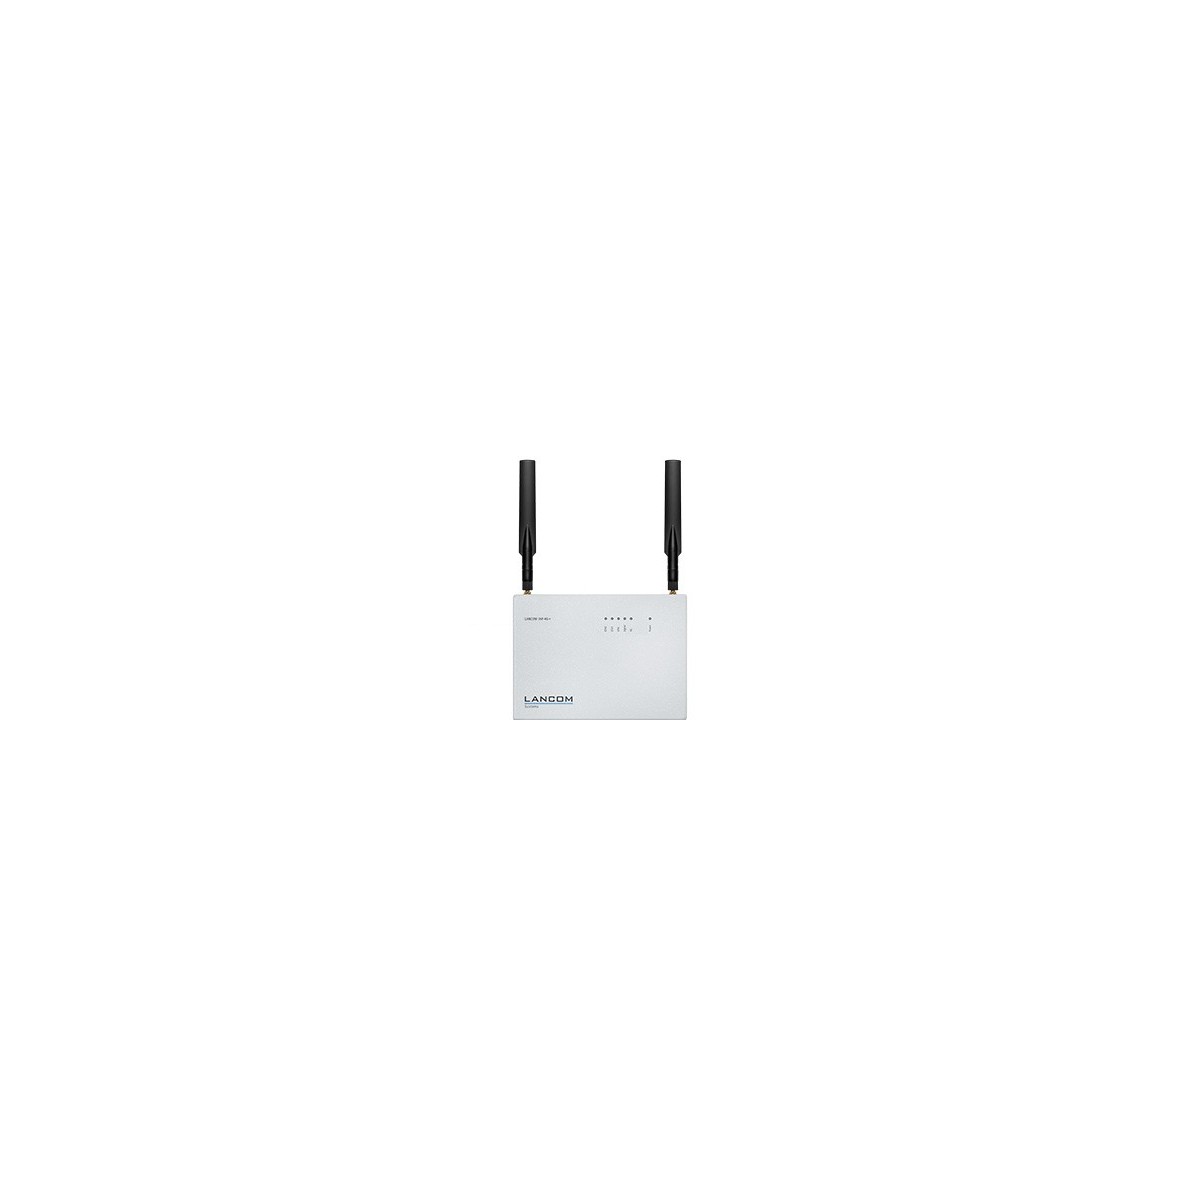 Lancom IAP-4G+ - Ethernet LAN - 3G - 4G - ADSL2 - Gray - Tabletop router